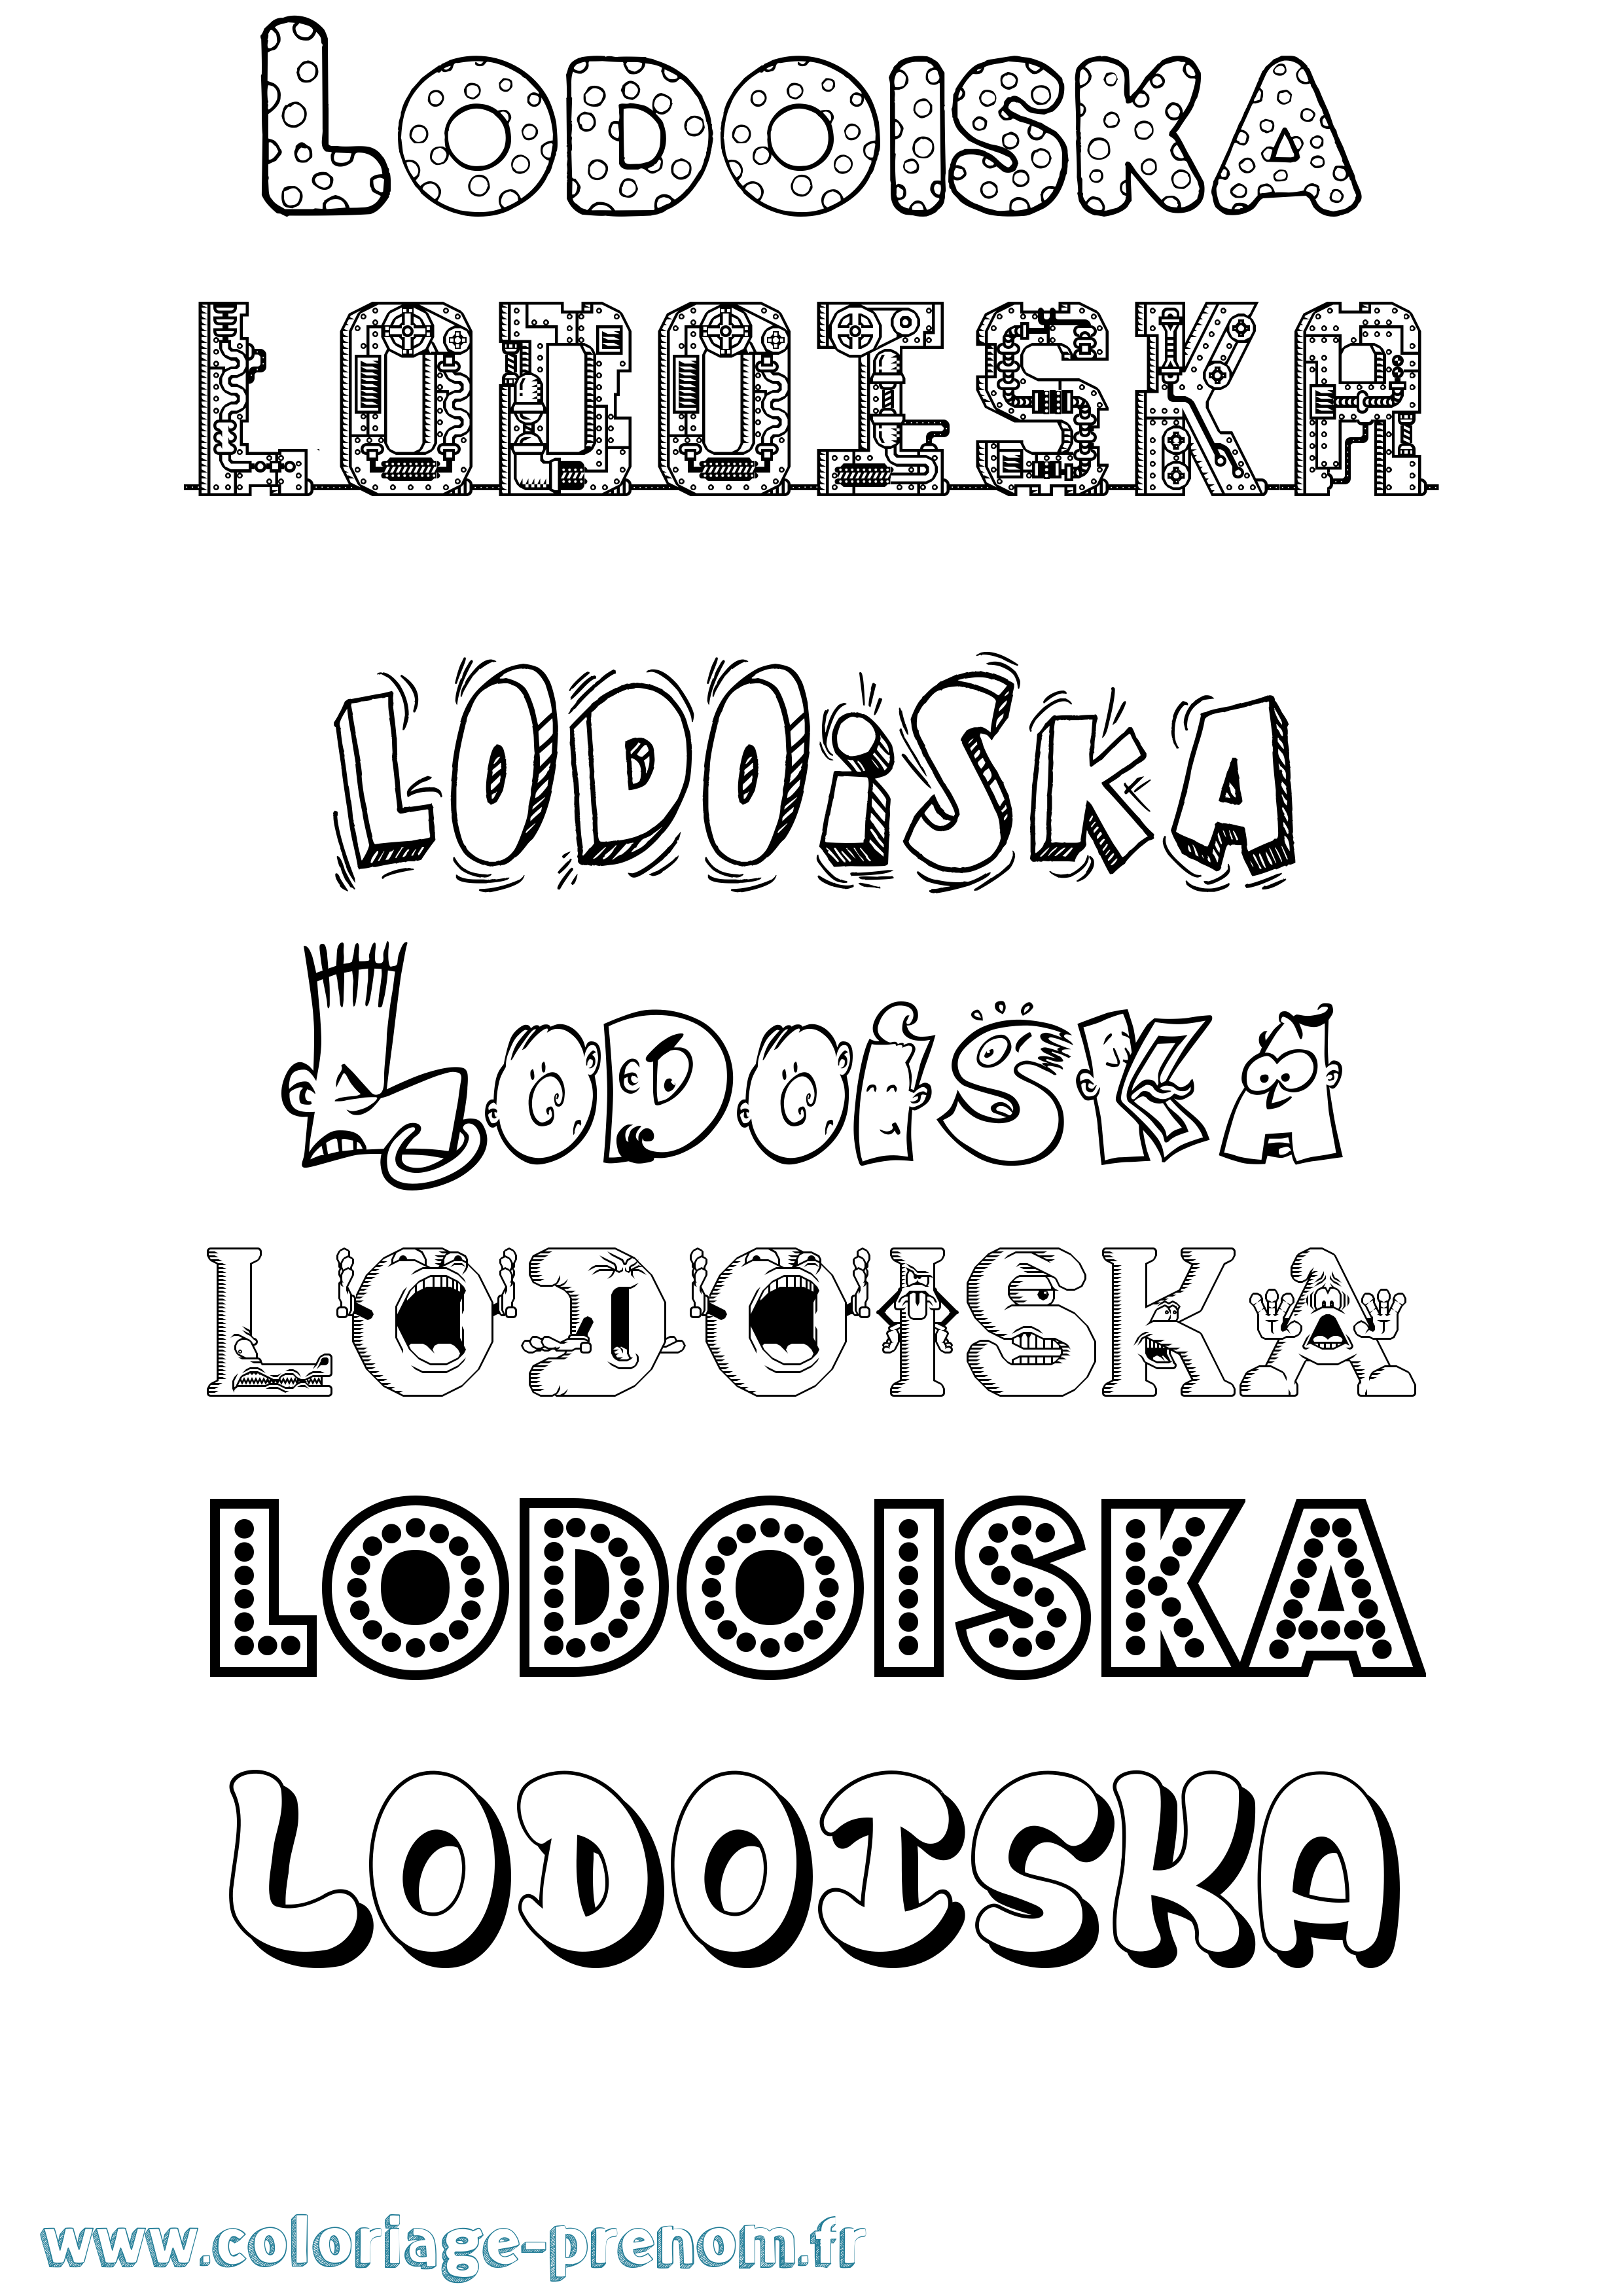 Coloriage prénom Lodoiska Fun